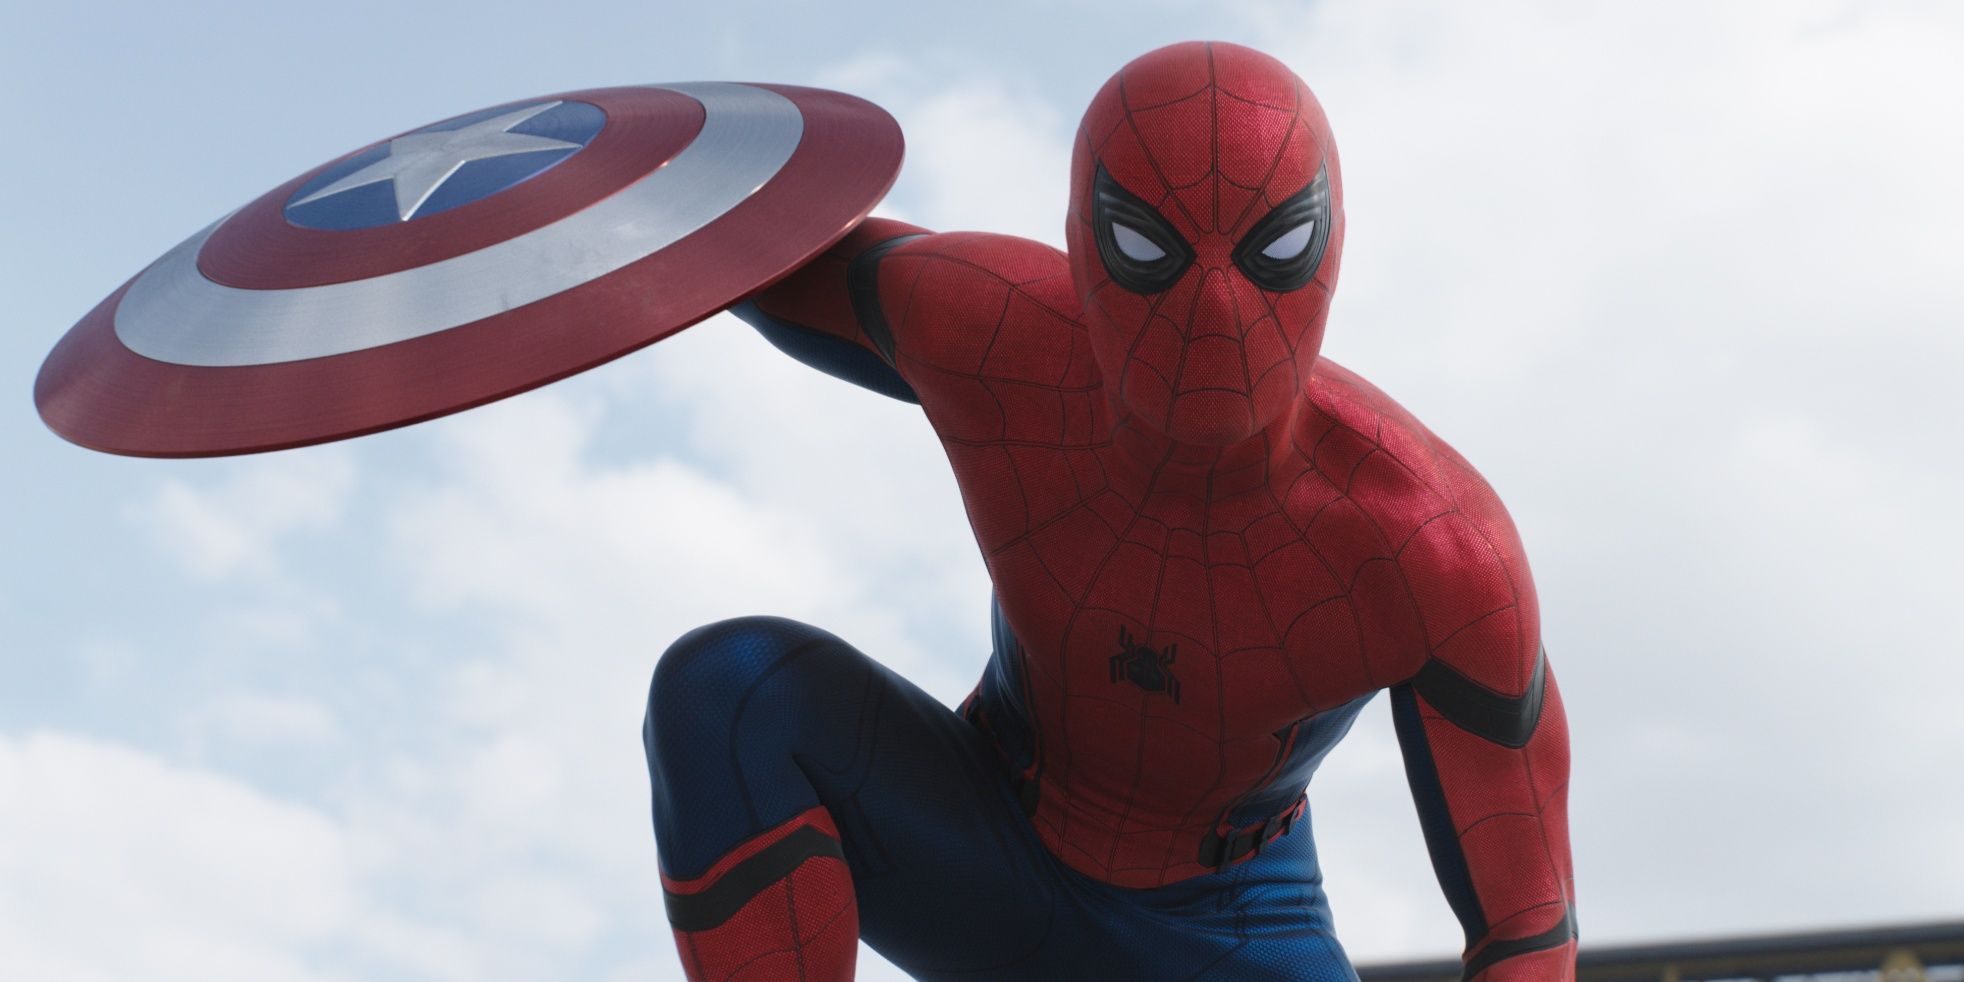 Spider-Man holding Captain America's shield in Civil War